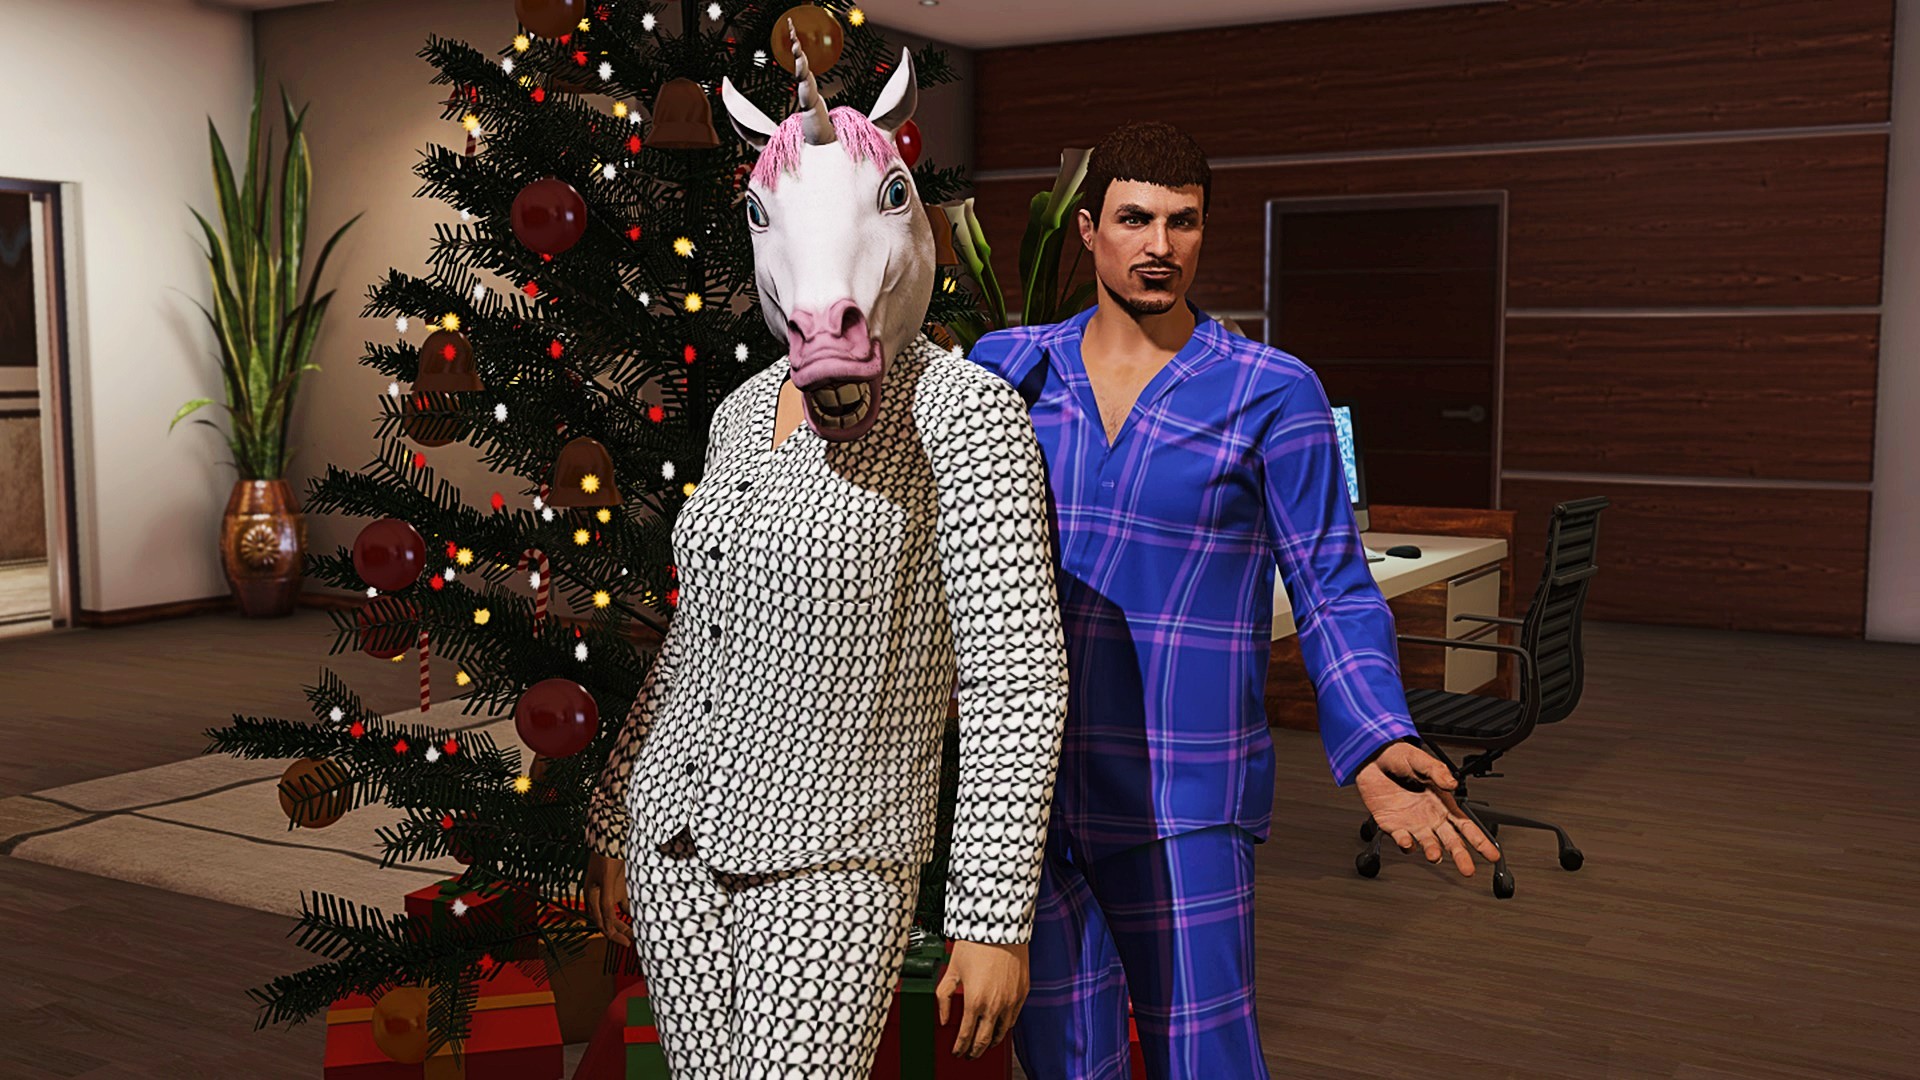 GTA Online’s Christmas update brings snow, new cars, and festive freebies